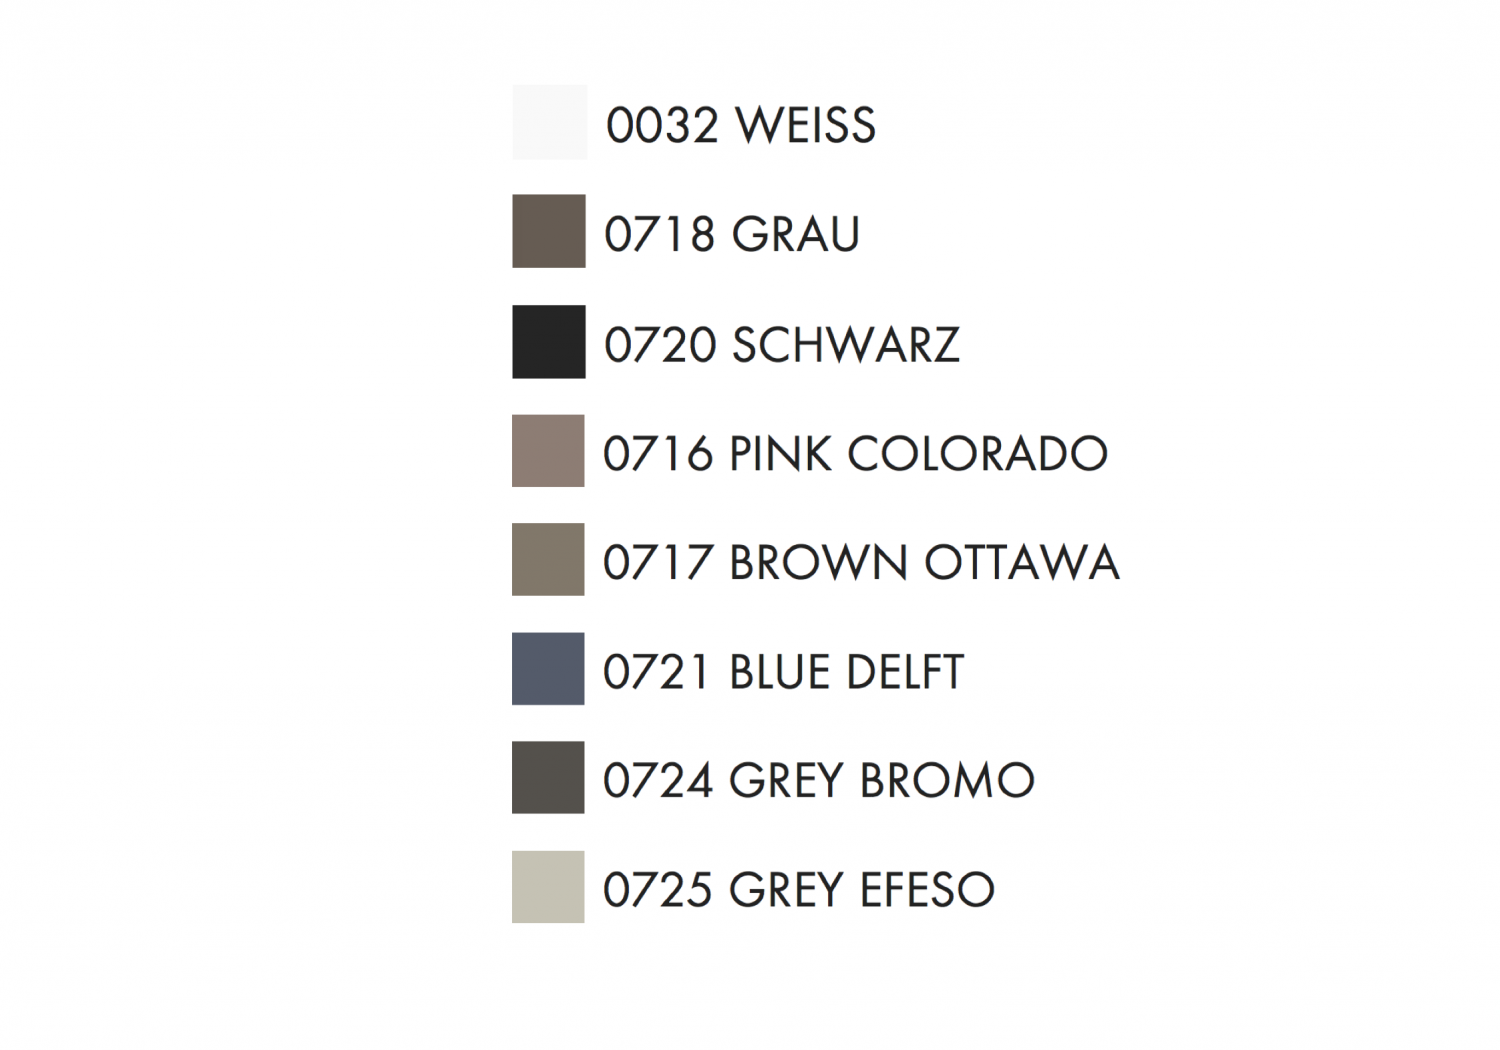 White, Black, Grey, Pink Colorado, Brown Ottawa, Blue Delphi, Grey Promo, Grey Efeso